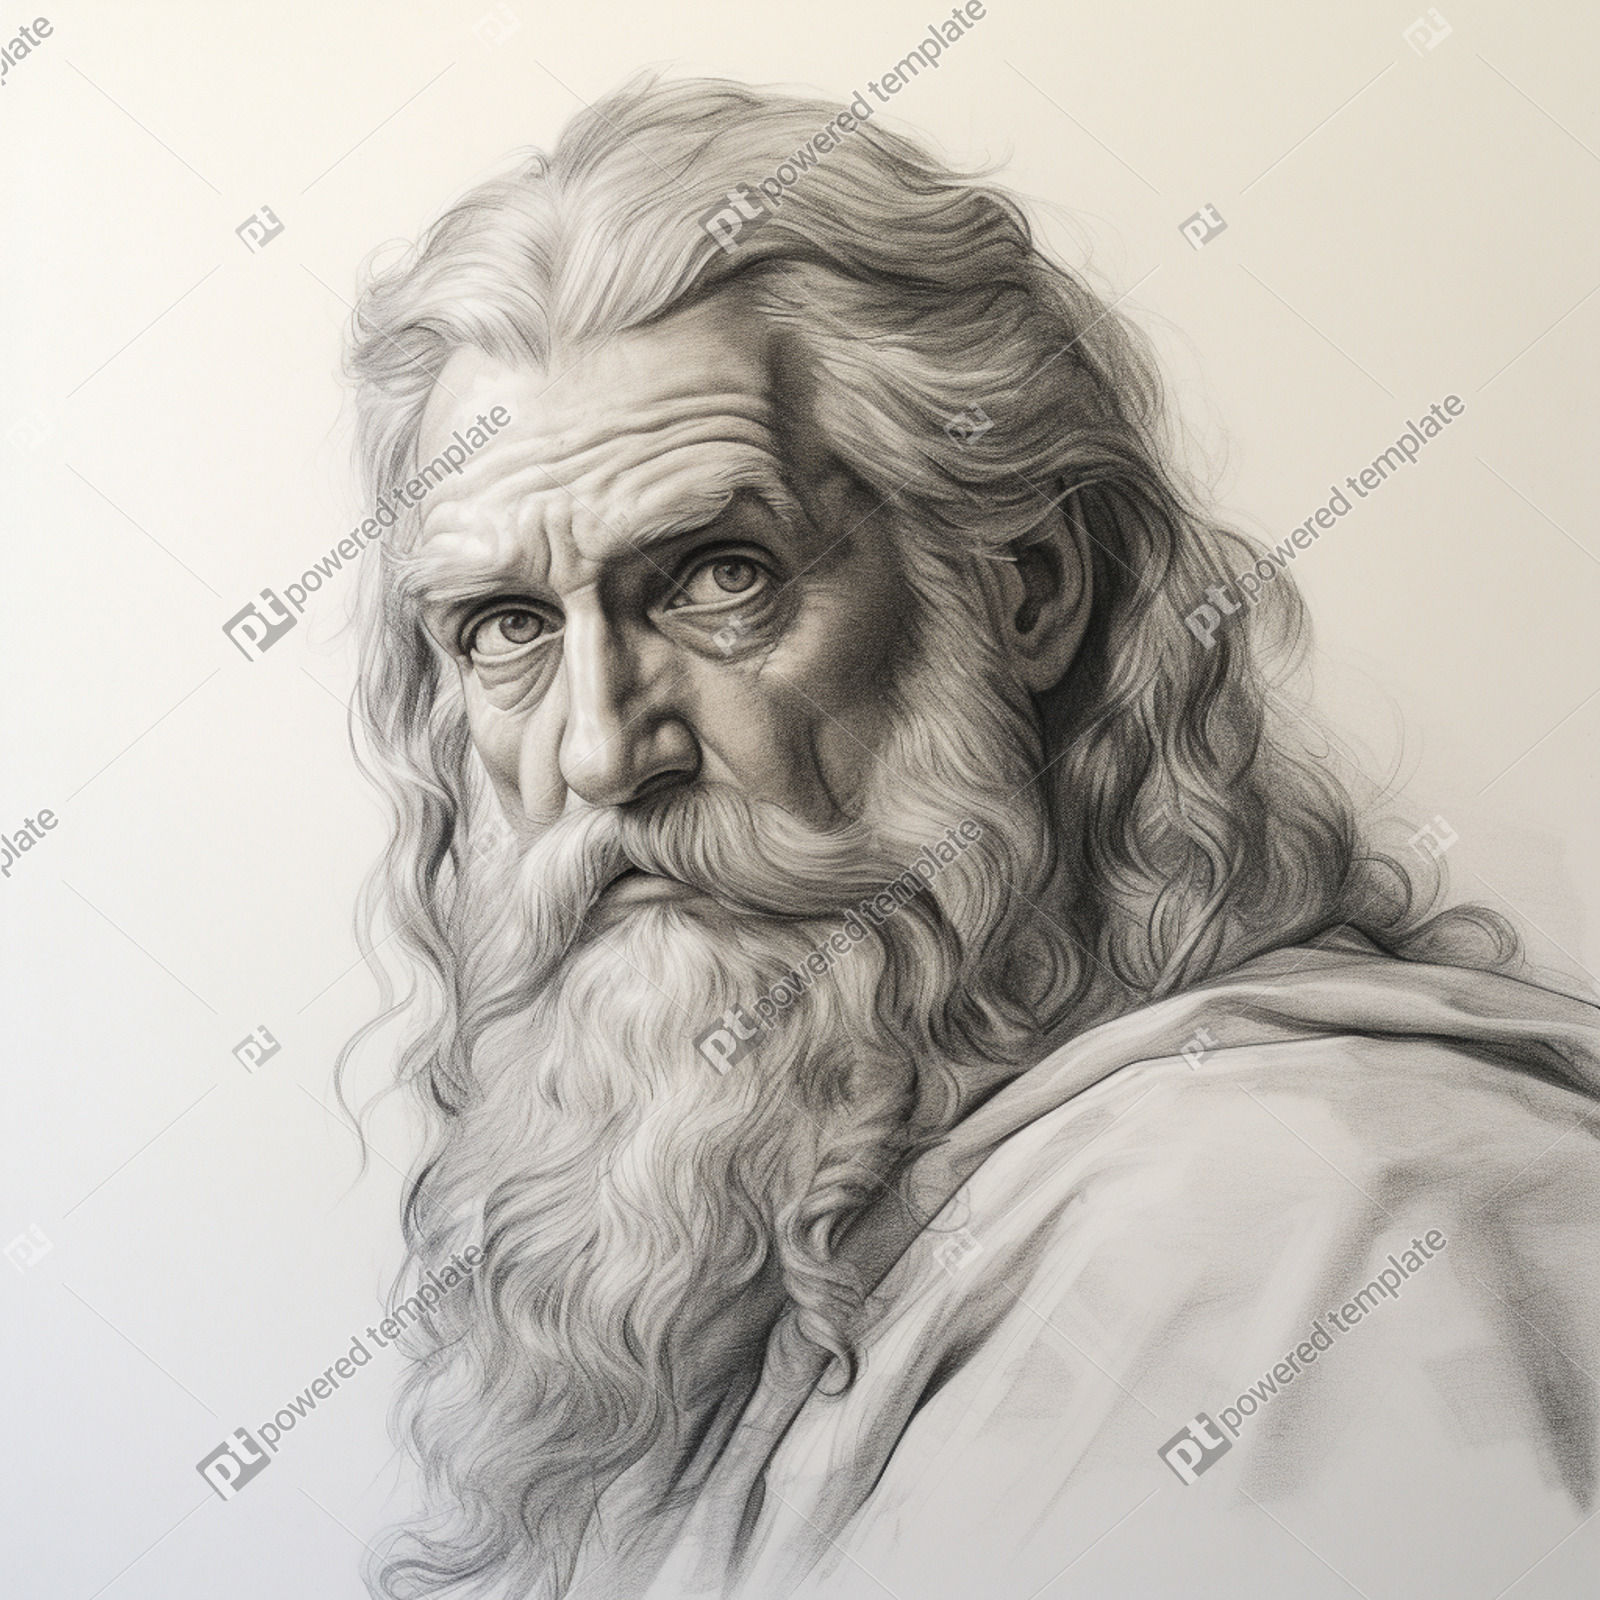 Greek Gods Pencil Drawing by gavinocapachino on DeviantArt